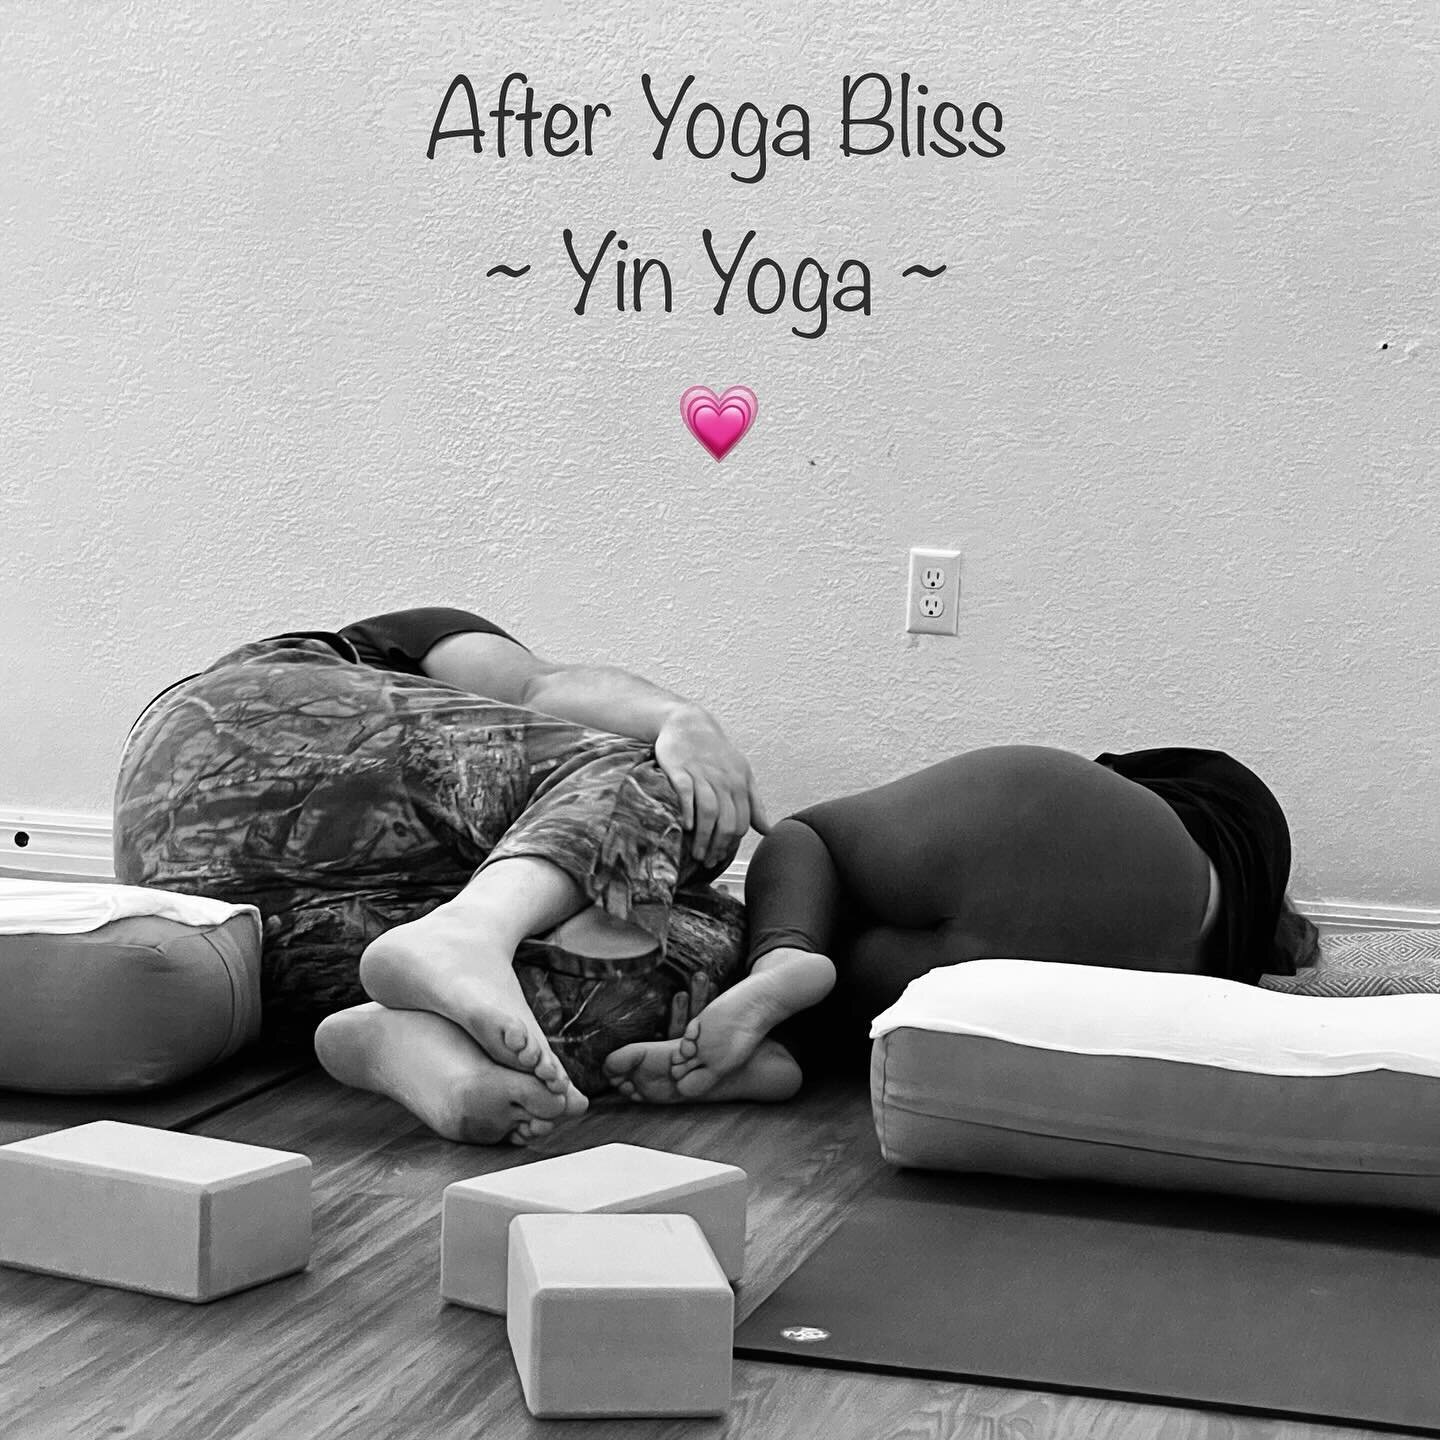 Yin Yoga, February 14th at 6pm!